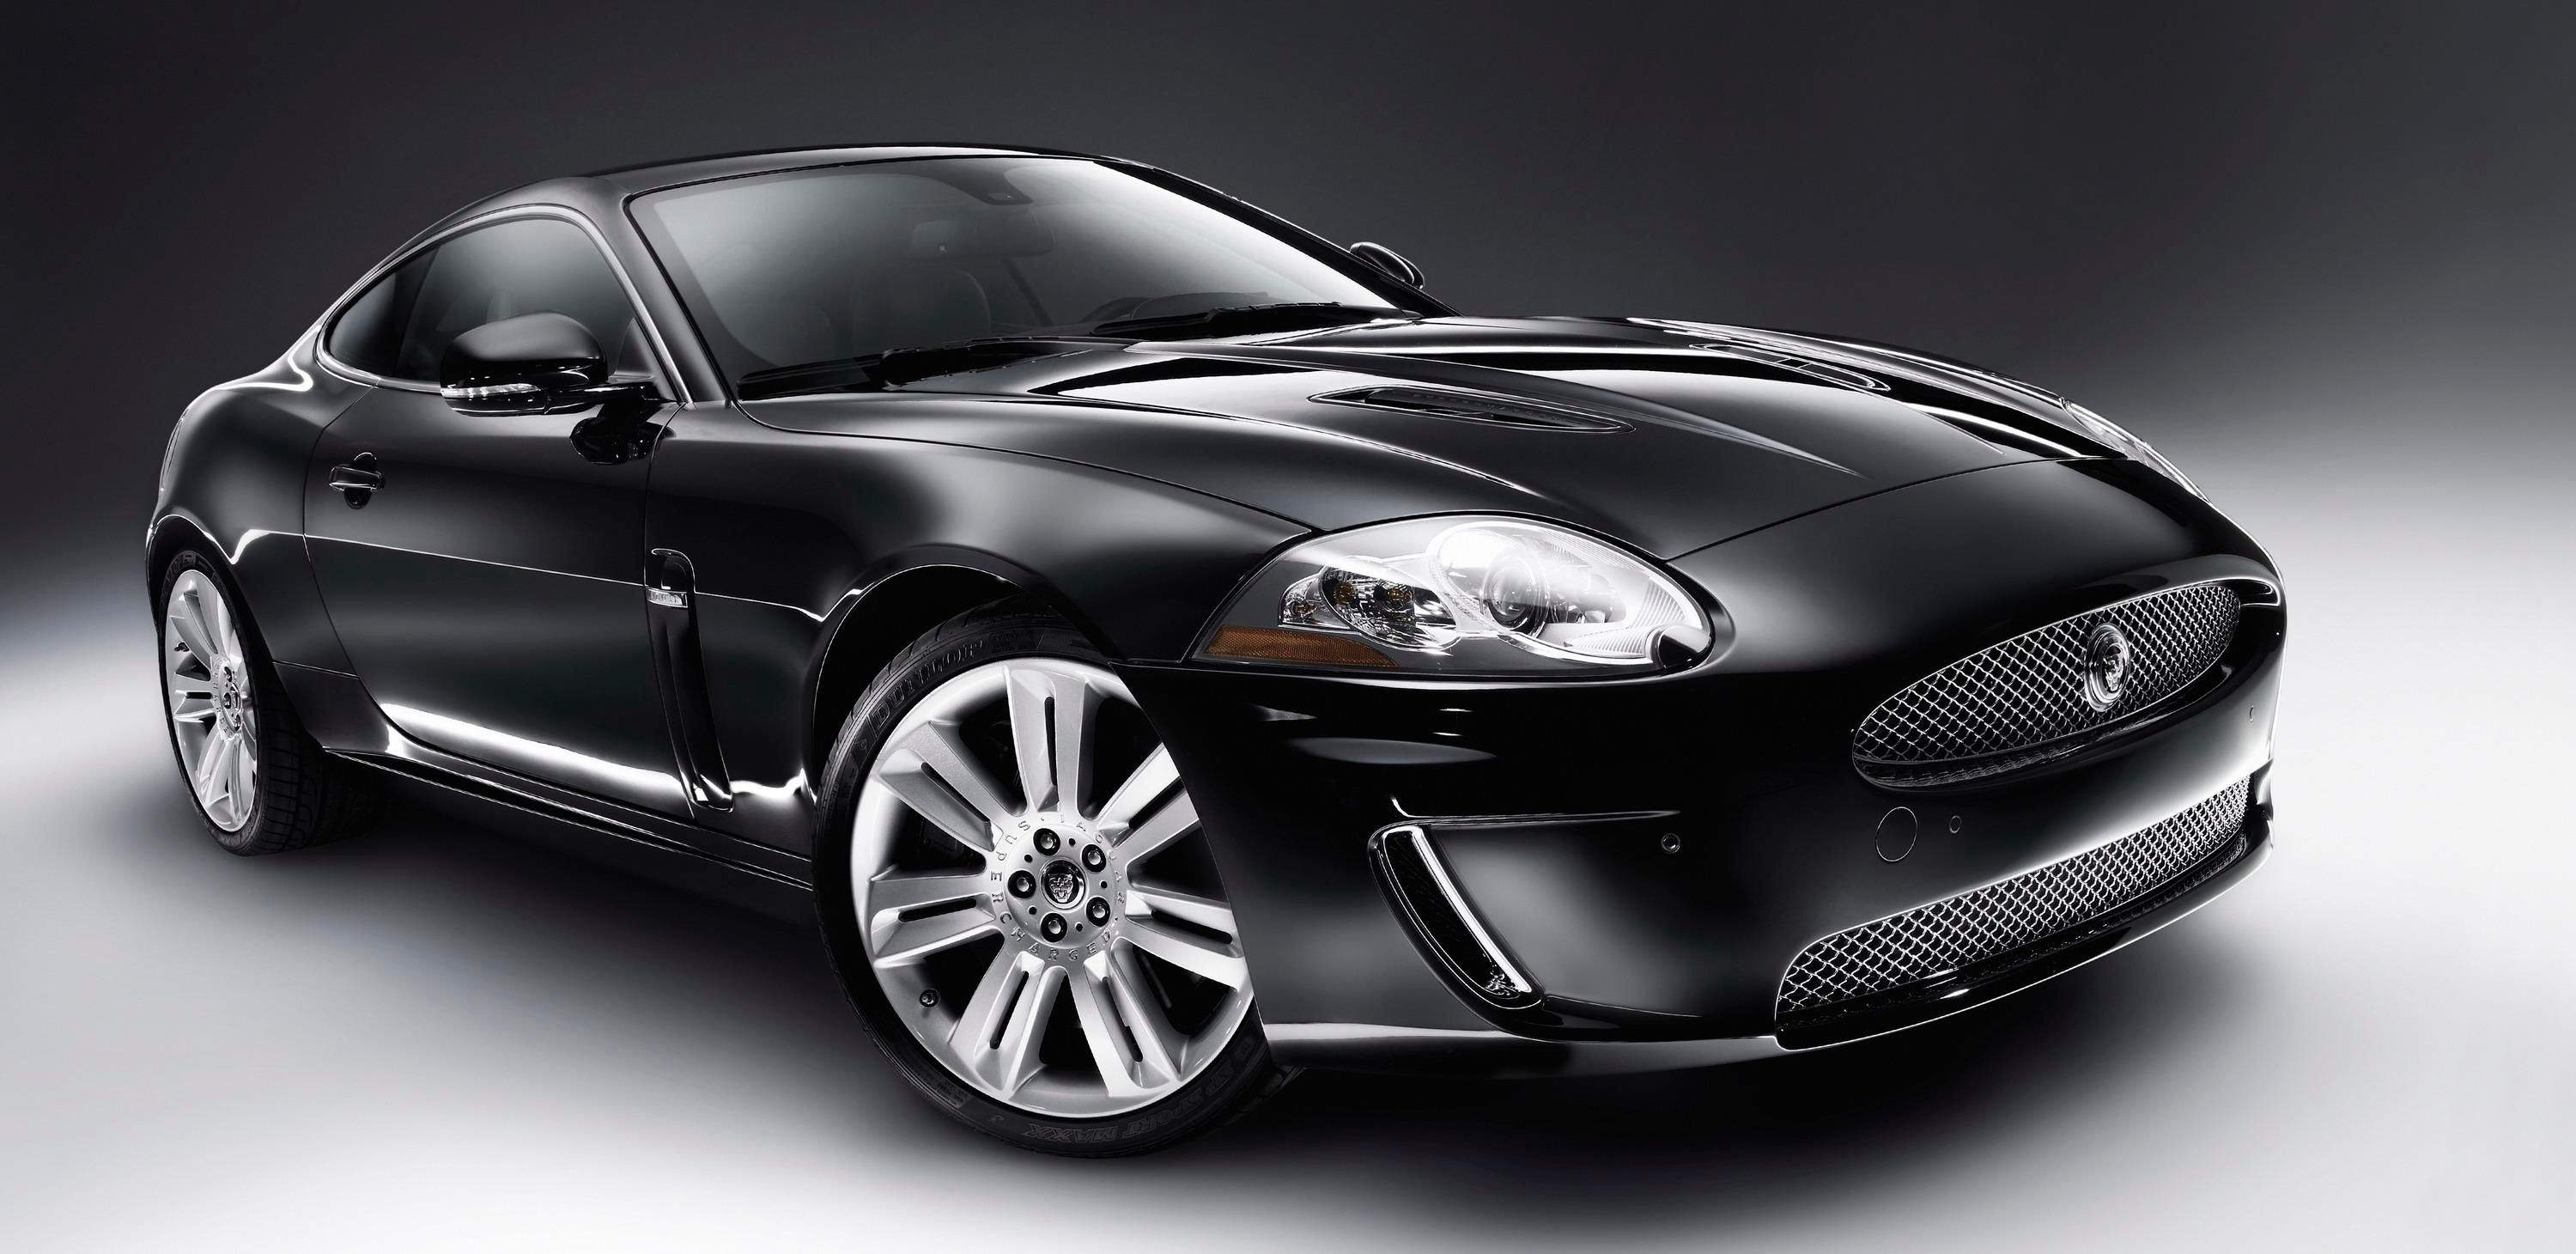 2010 Jaguar XK and XKR